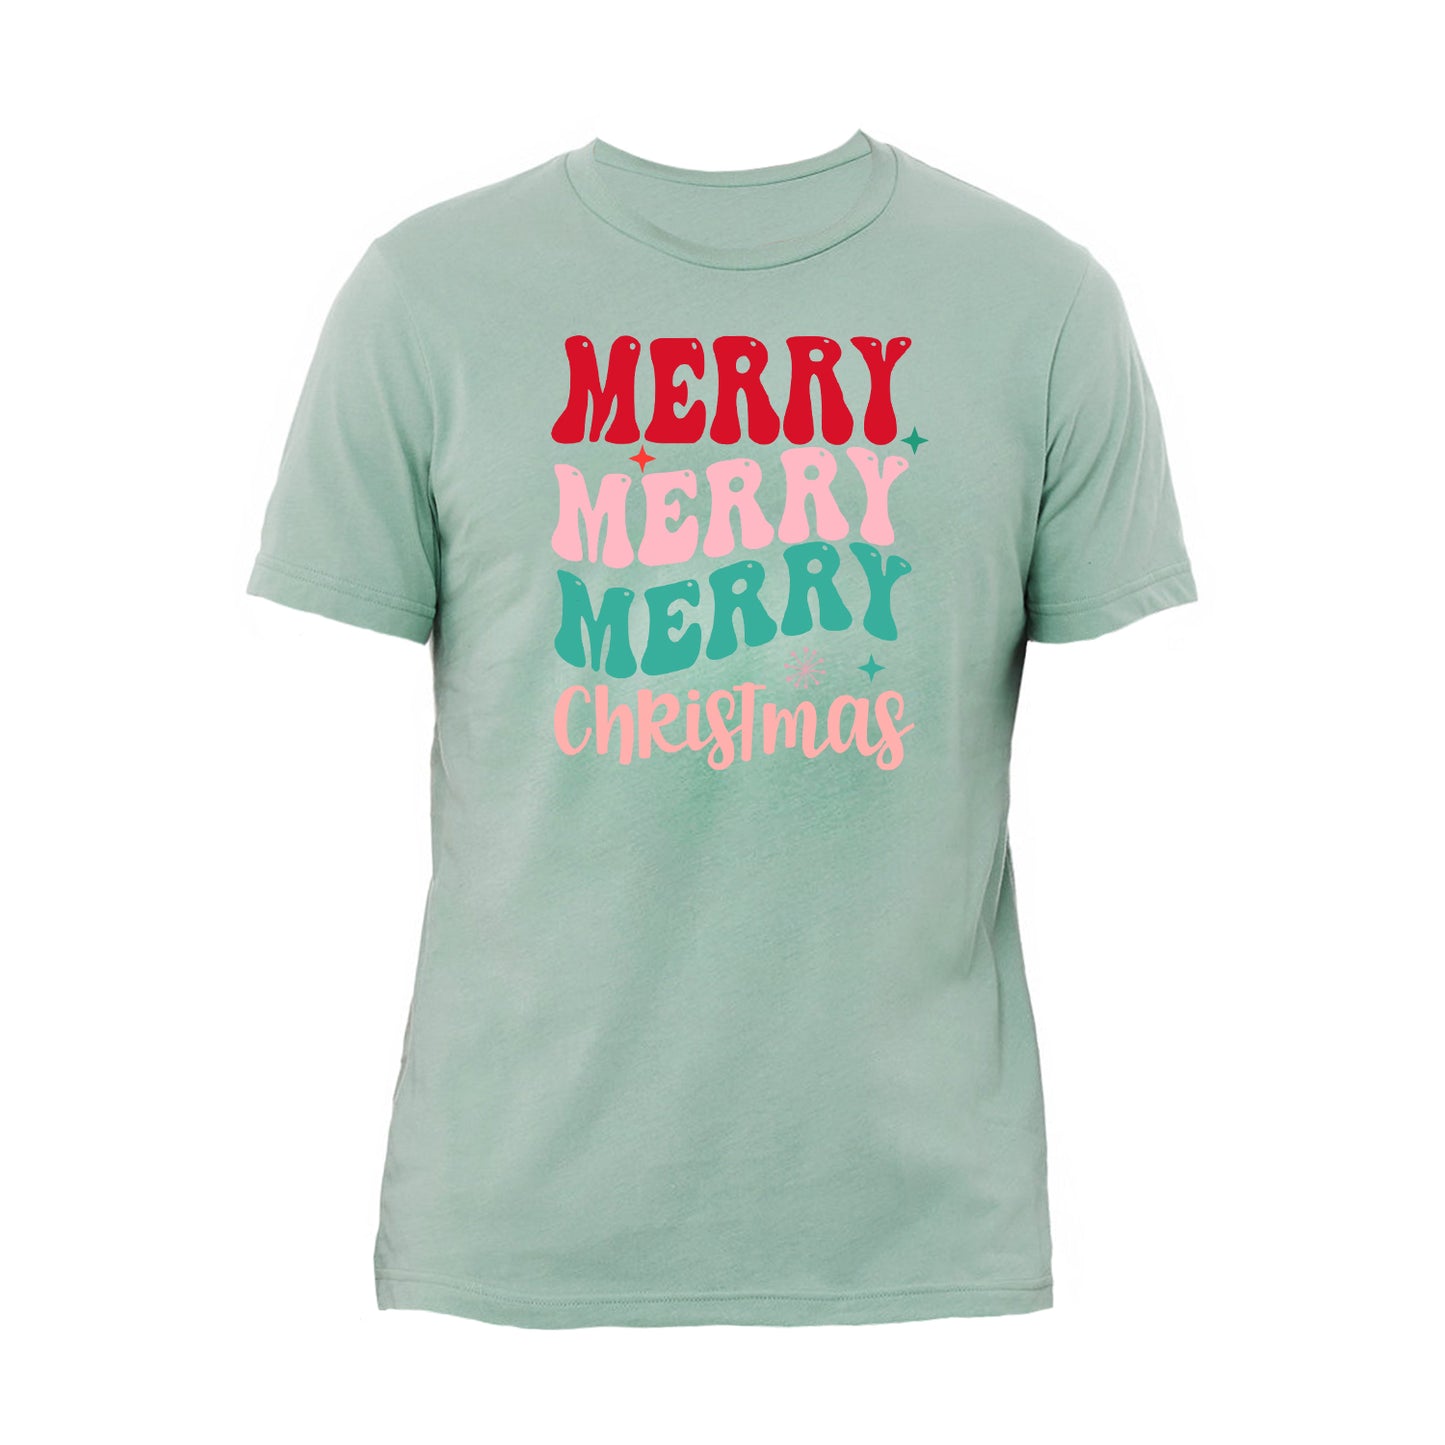 "Merry, Merry, Merry Christmas" - T-shirt